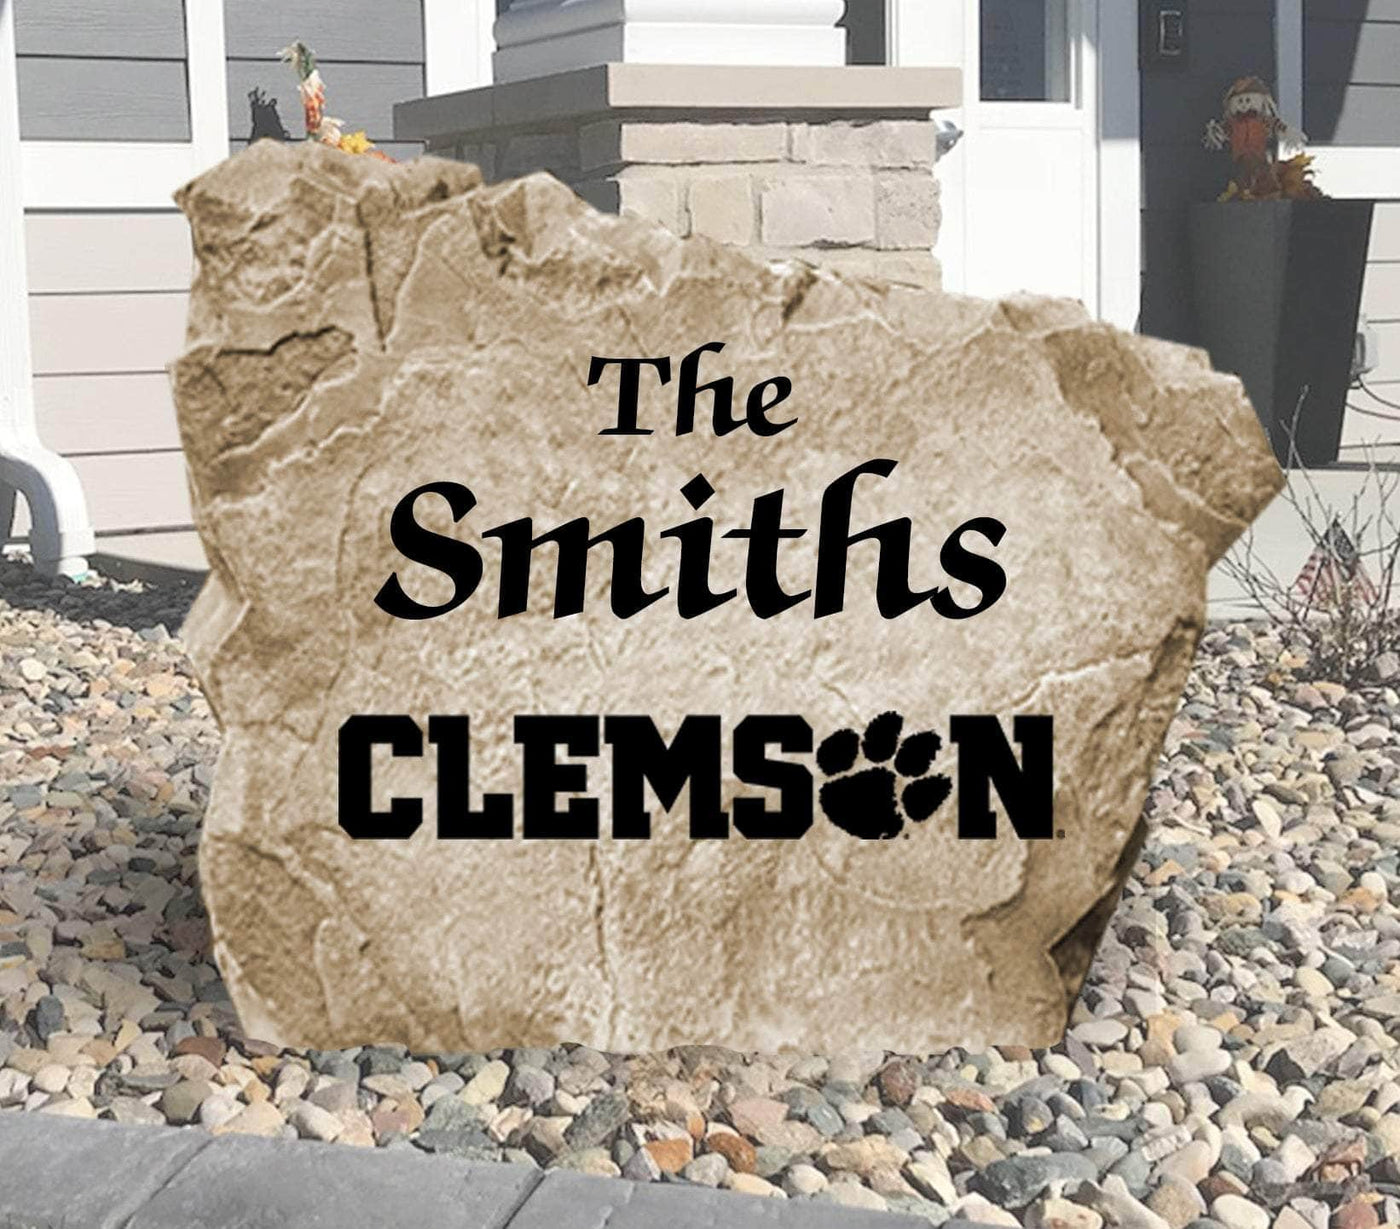 Clemson University Name Stone